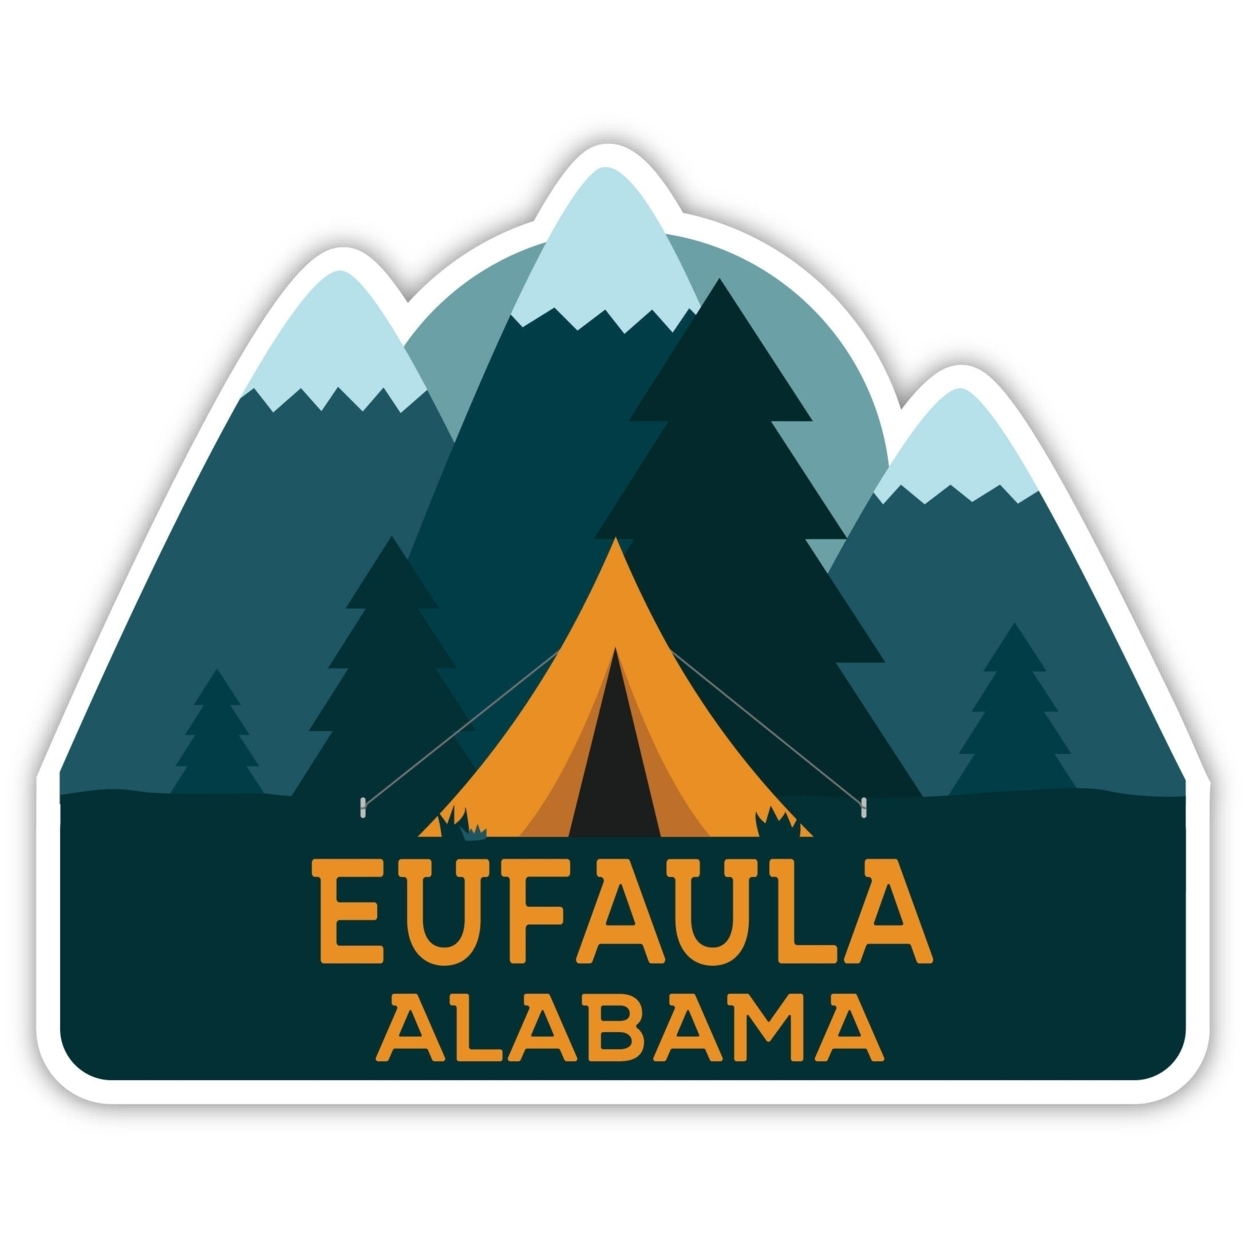 Eufaula Alabama Souvenir Decorative Stickers (Choose Theme And Size) - Single Unit, 8-Inch, Camp Life